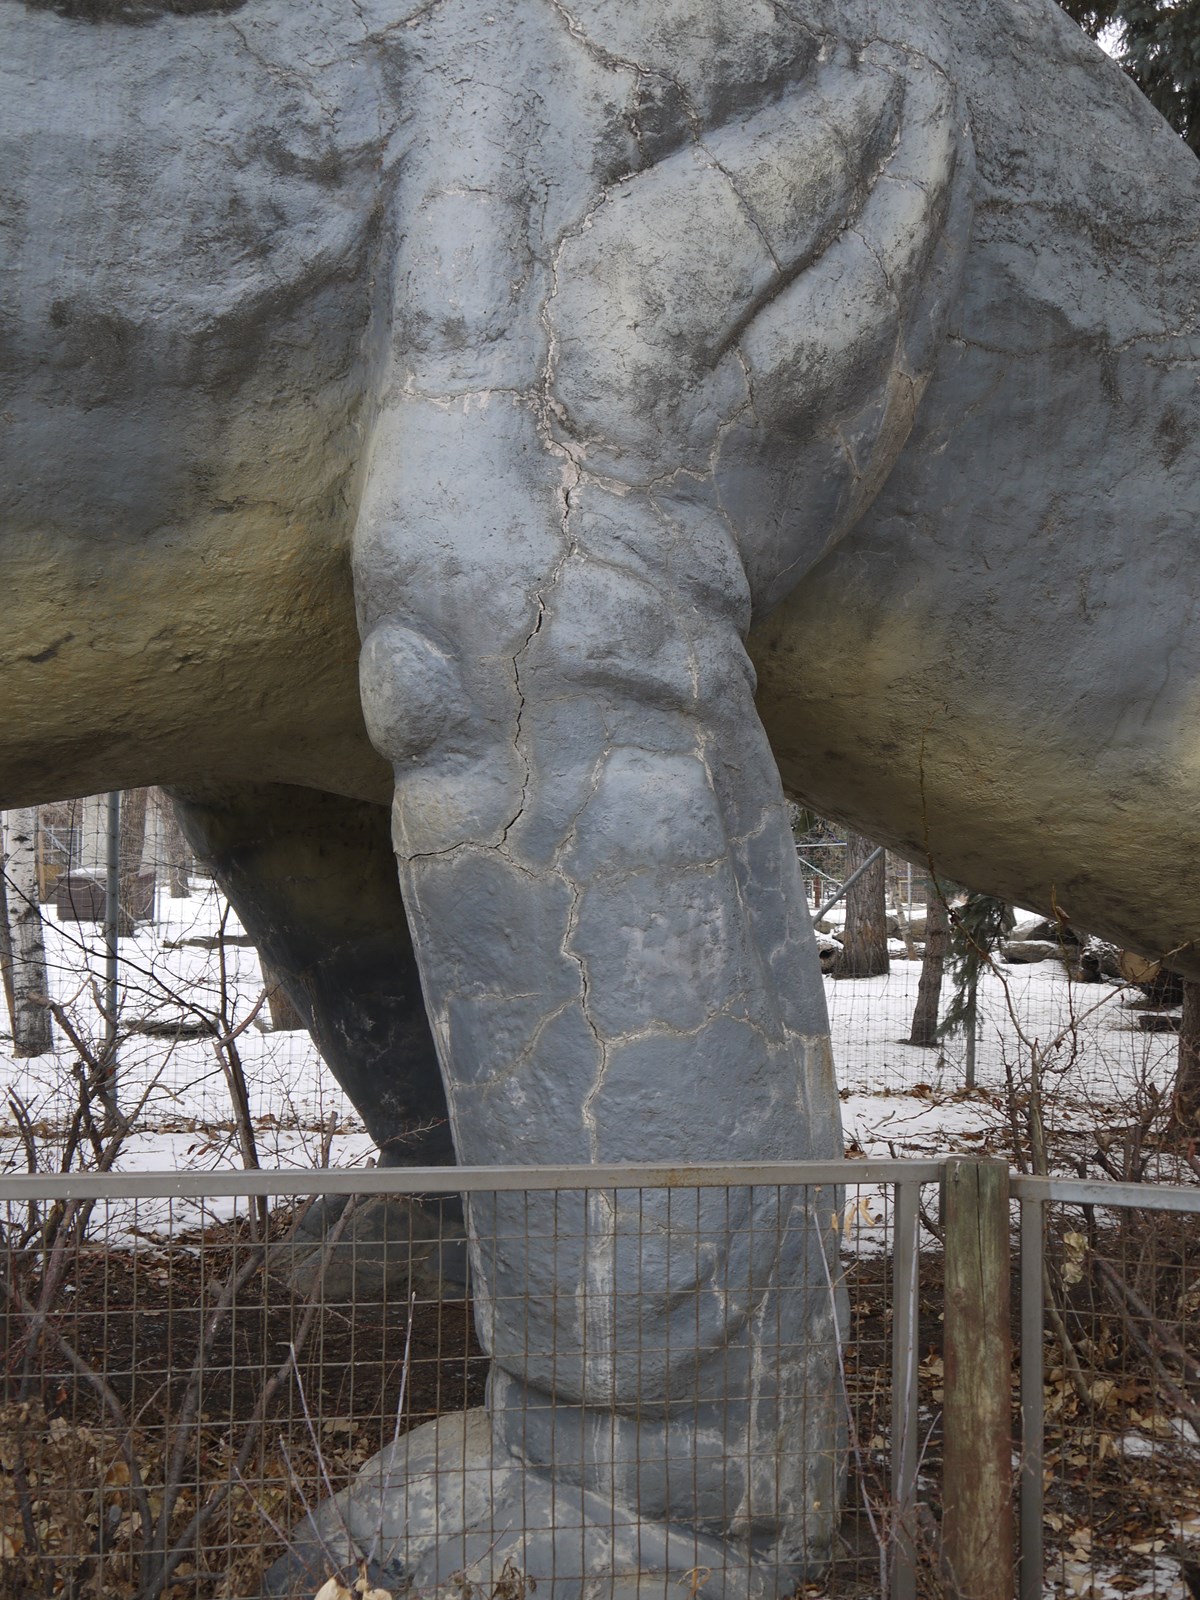 Closeup of cracked hind left leg of dinosaur.